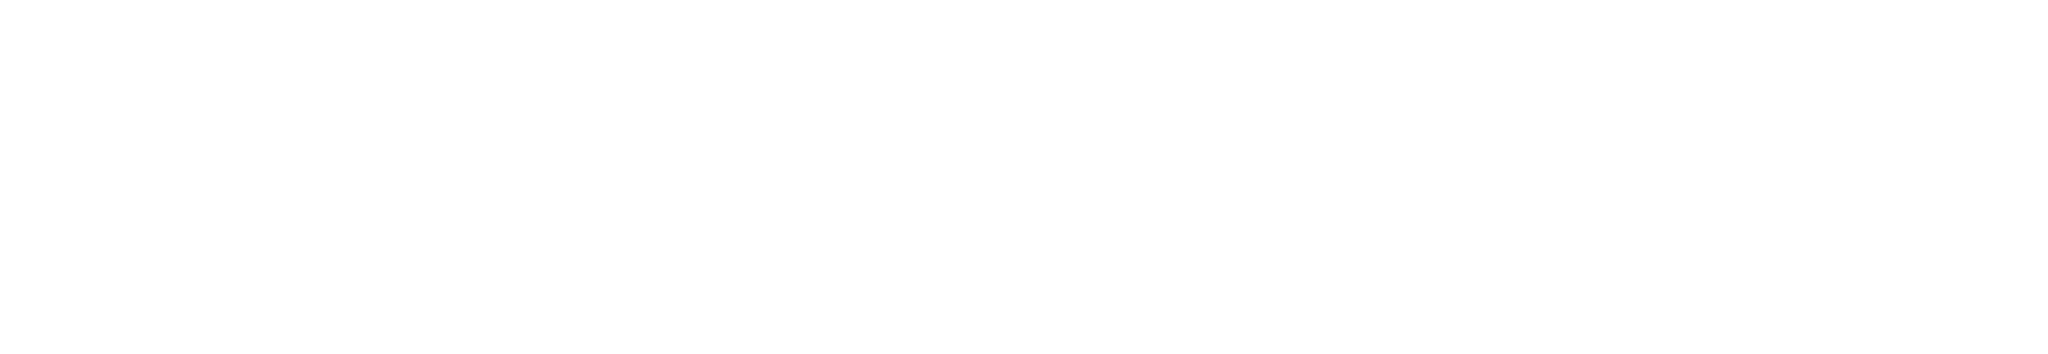 Kelly’s_Septic_Service_Ohio_logo_kellys_septic_service_white